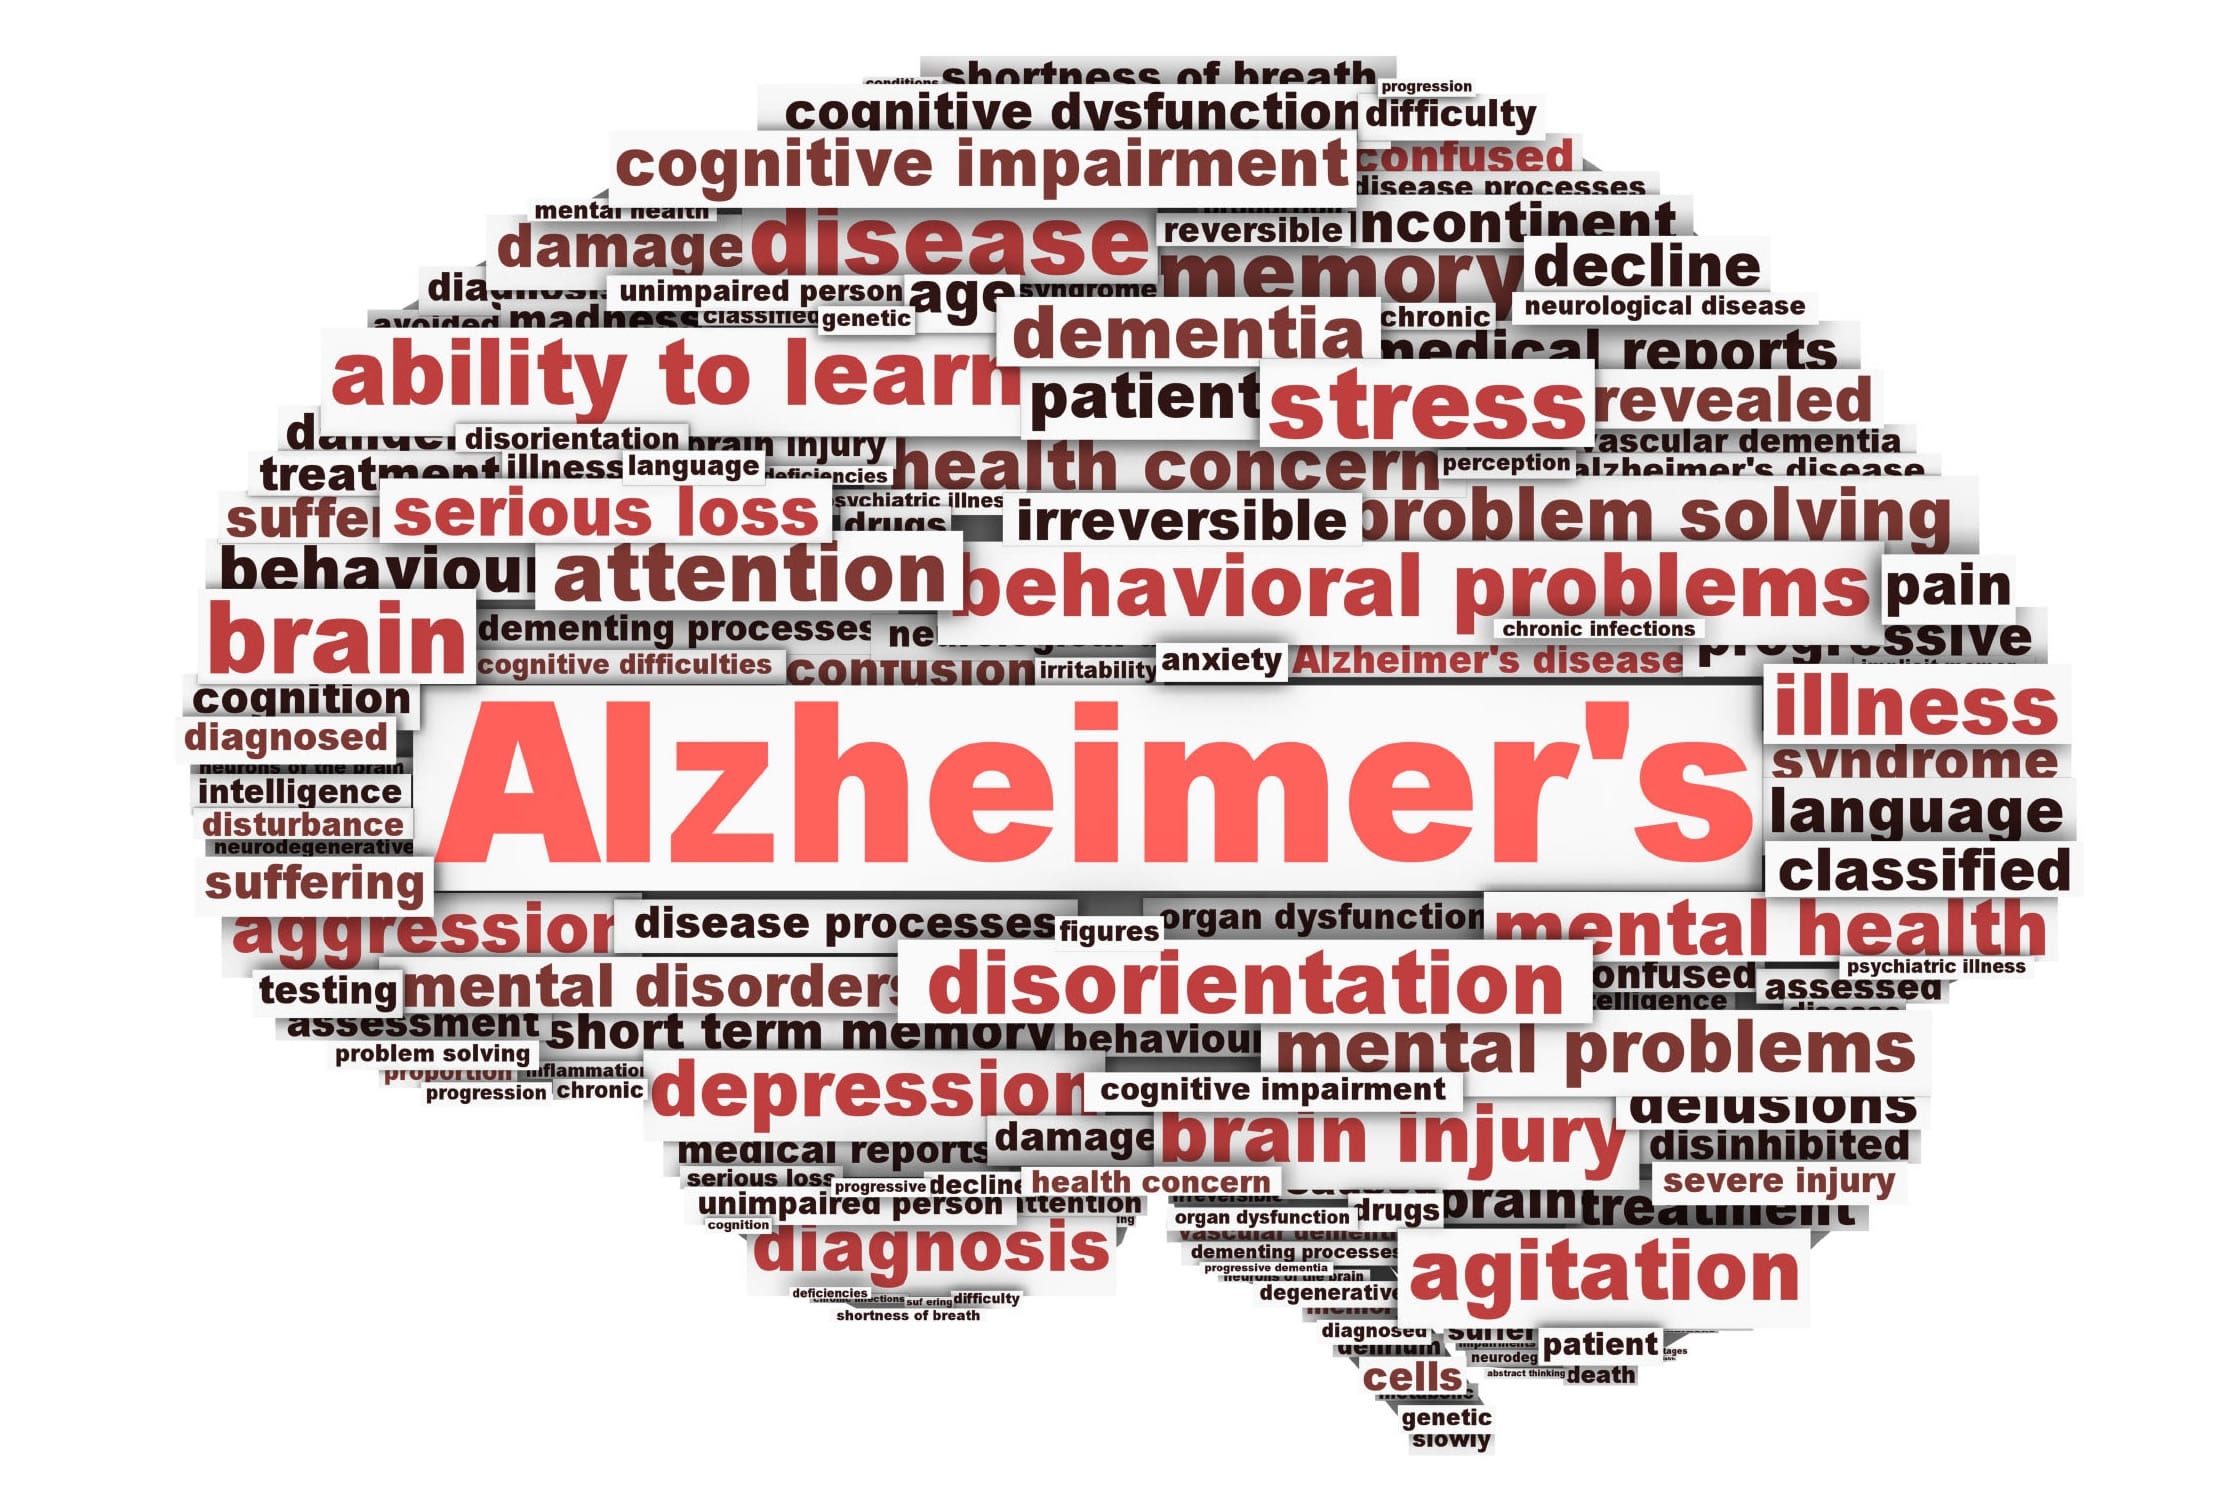 November is National Alzheimer's Disease Awareness Month